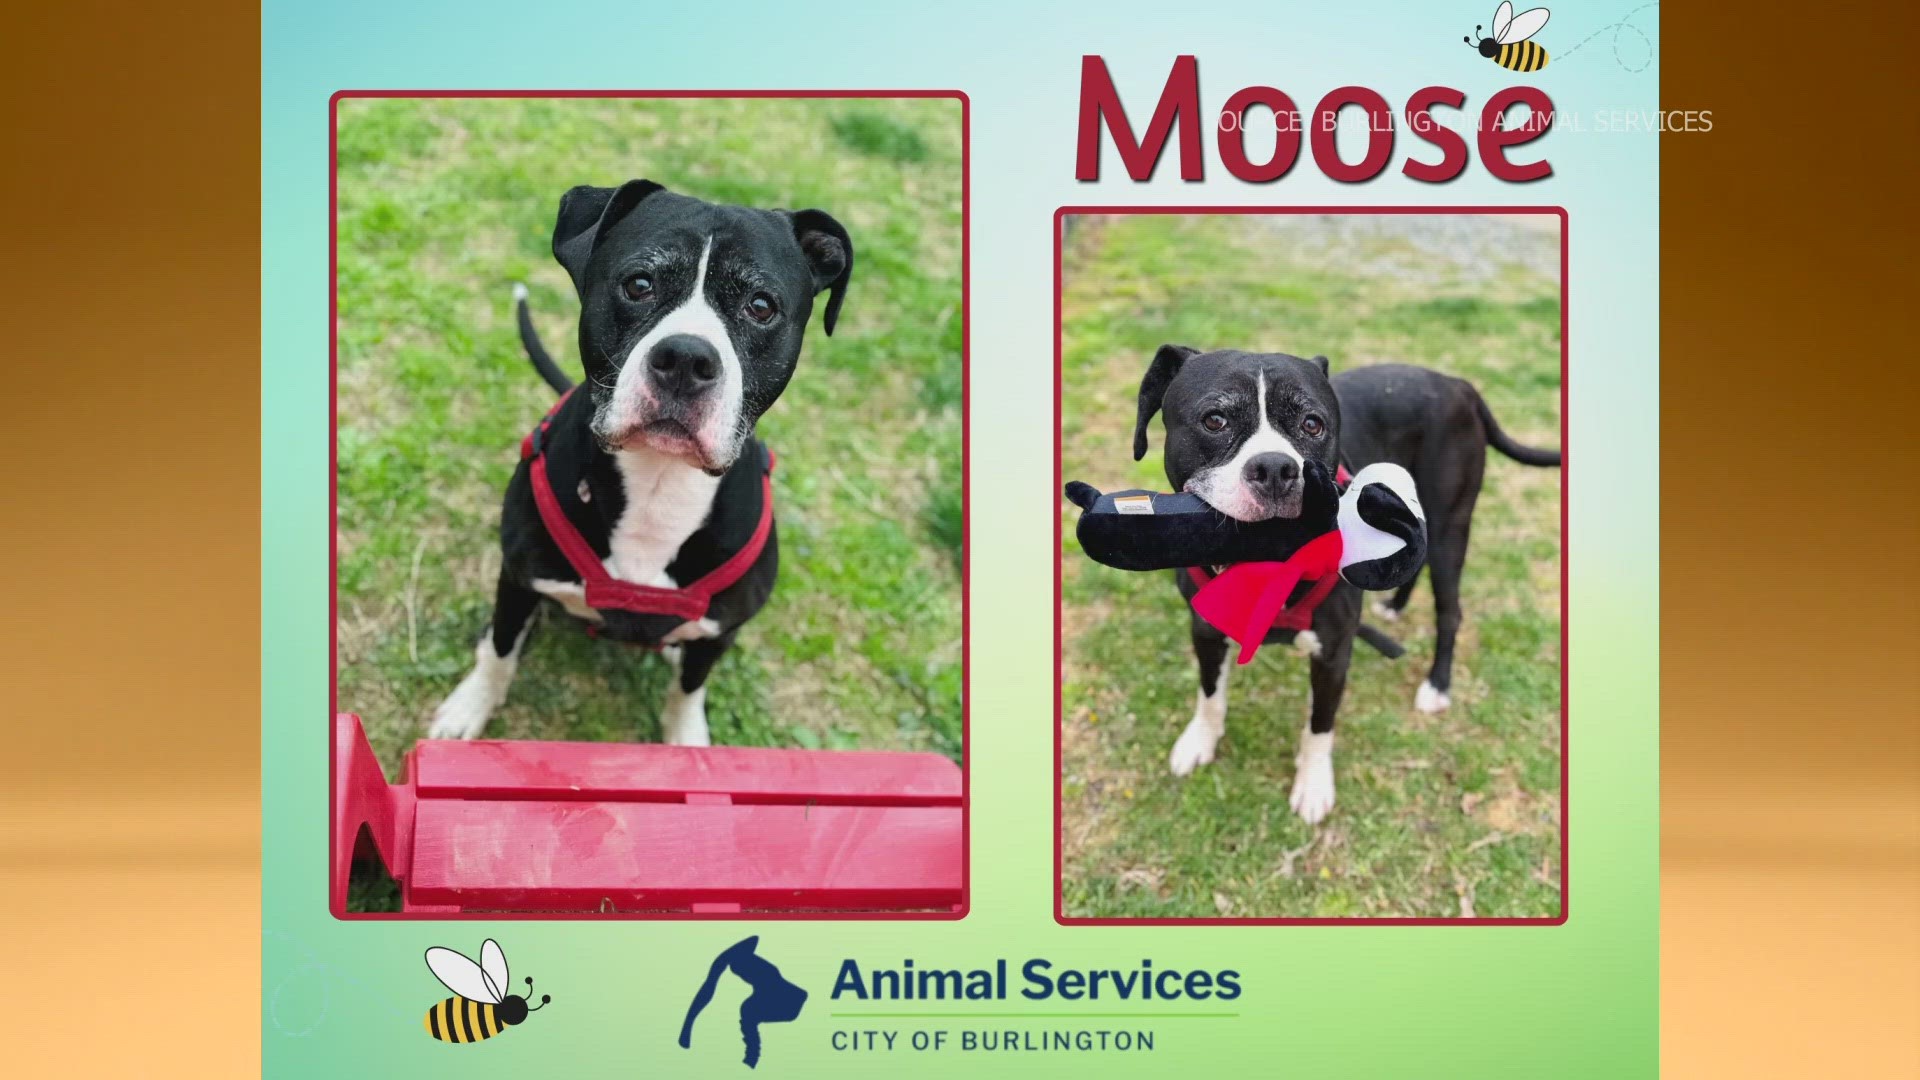 Let’s get Moose adopted!